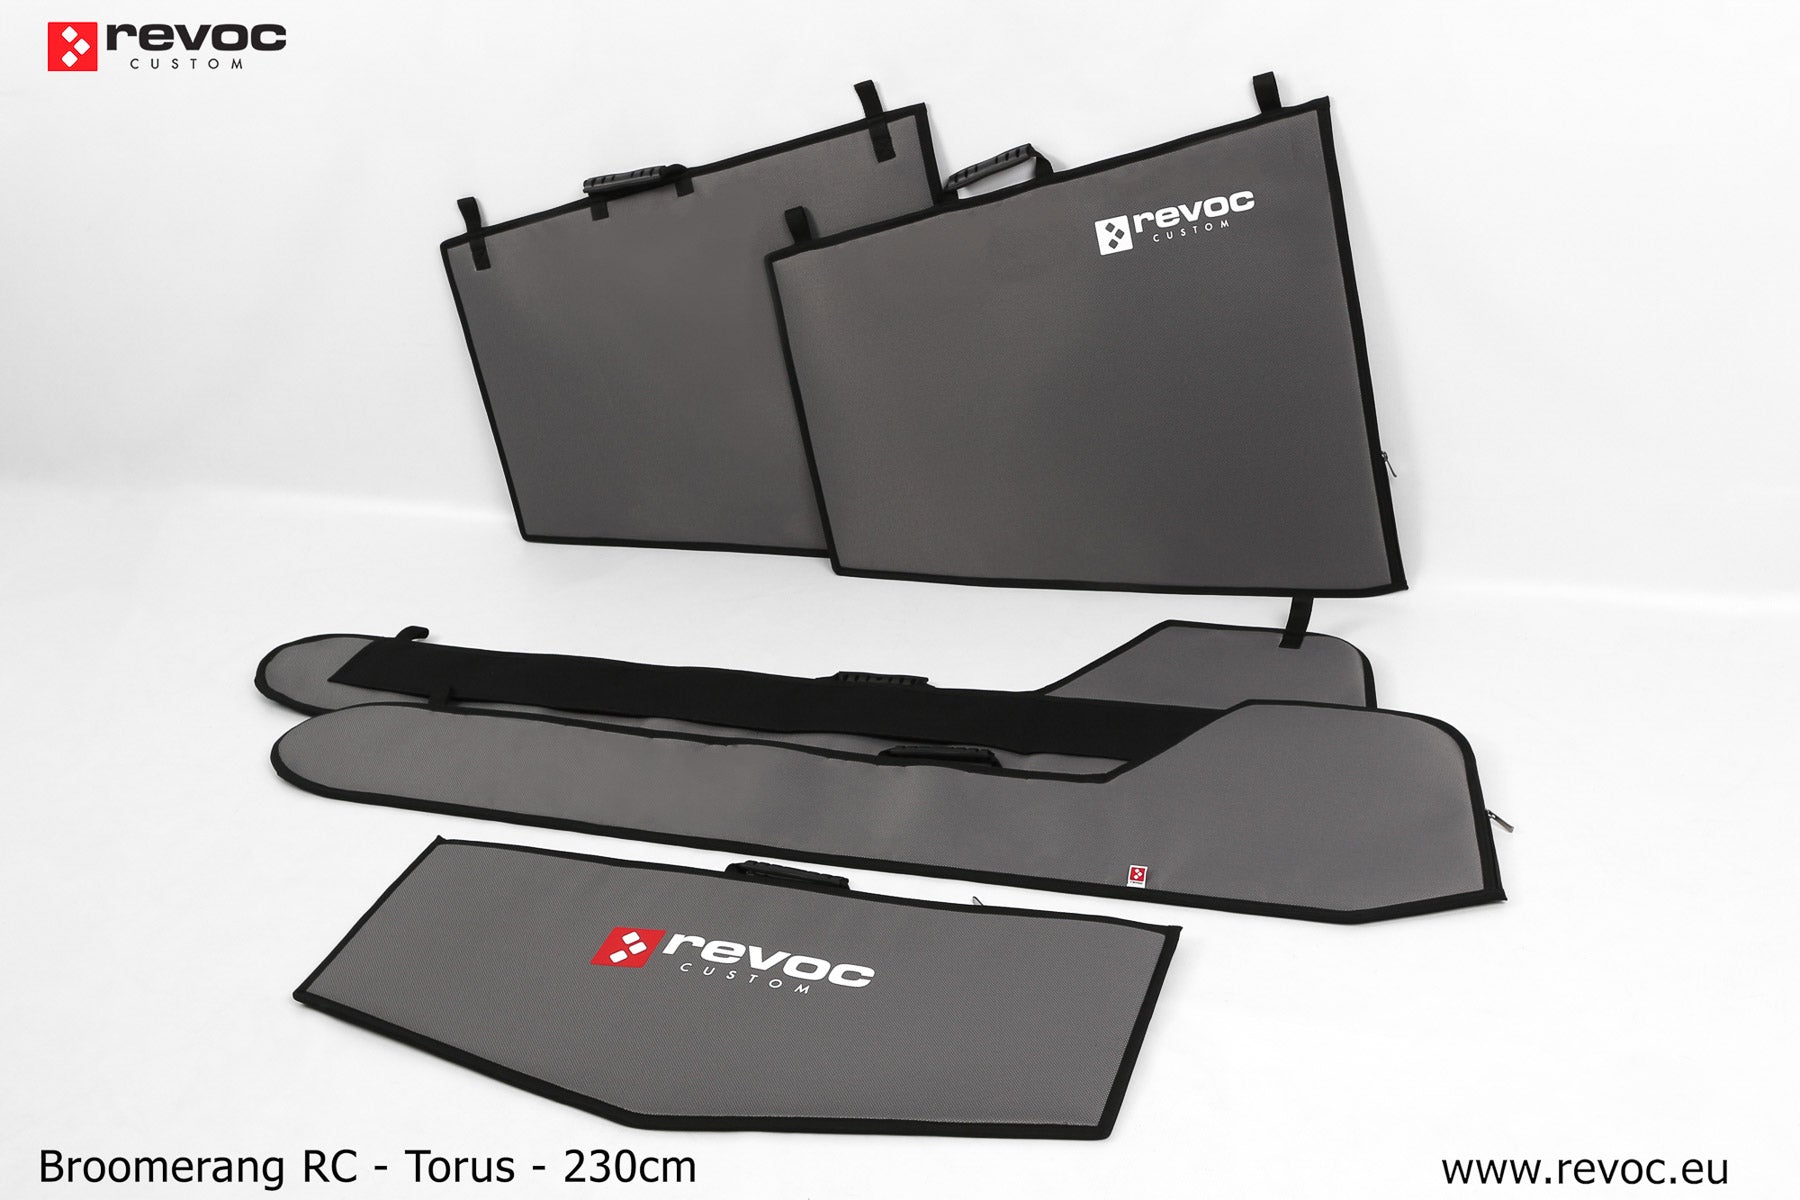 Revoc Model Material Bag Set for Boomerang RC - Torus - 230cm/90"